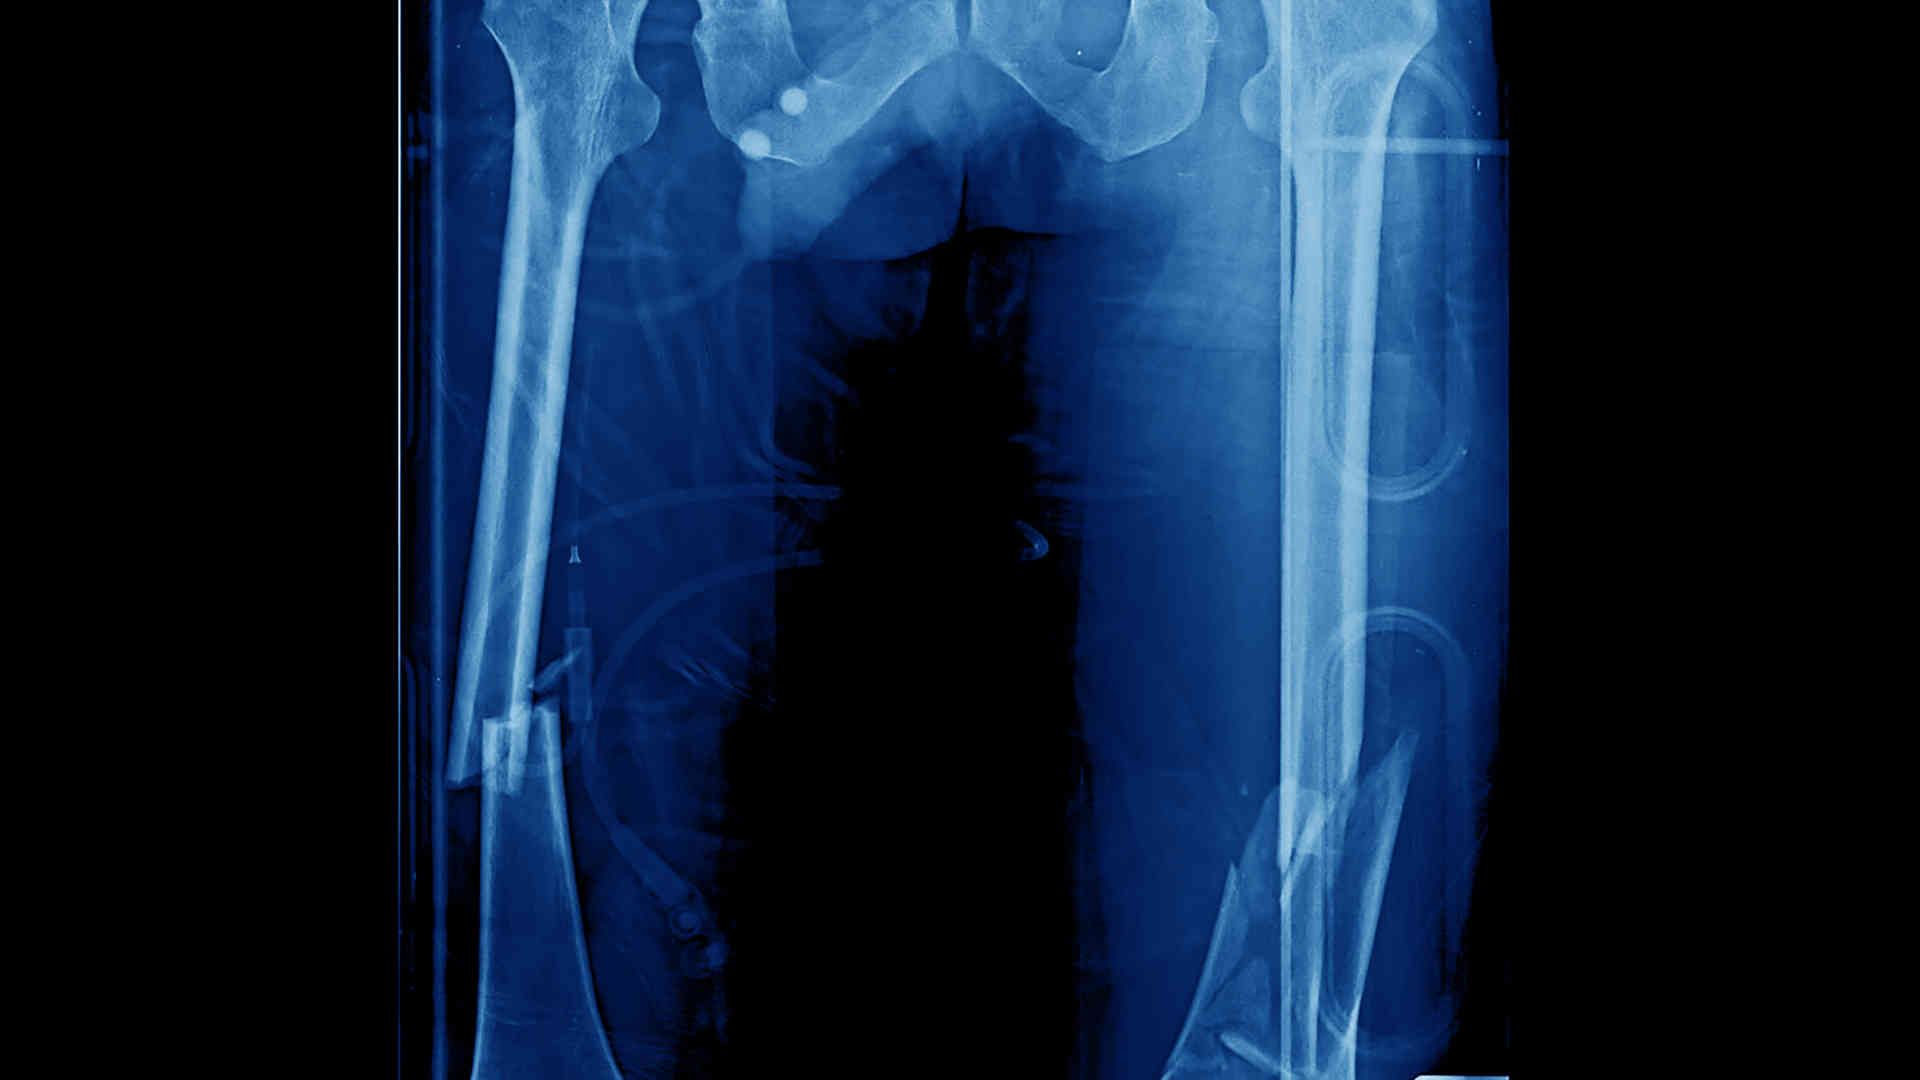 Imaging of bilateral femoral fractures